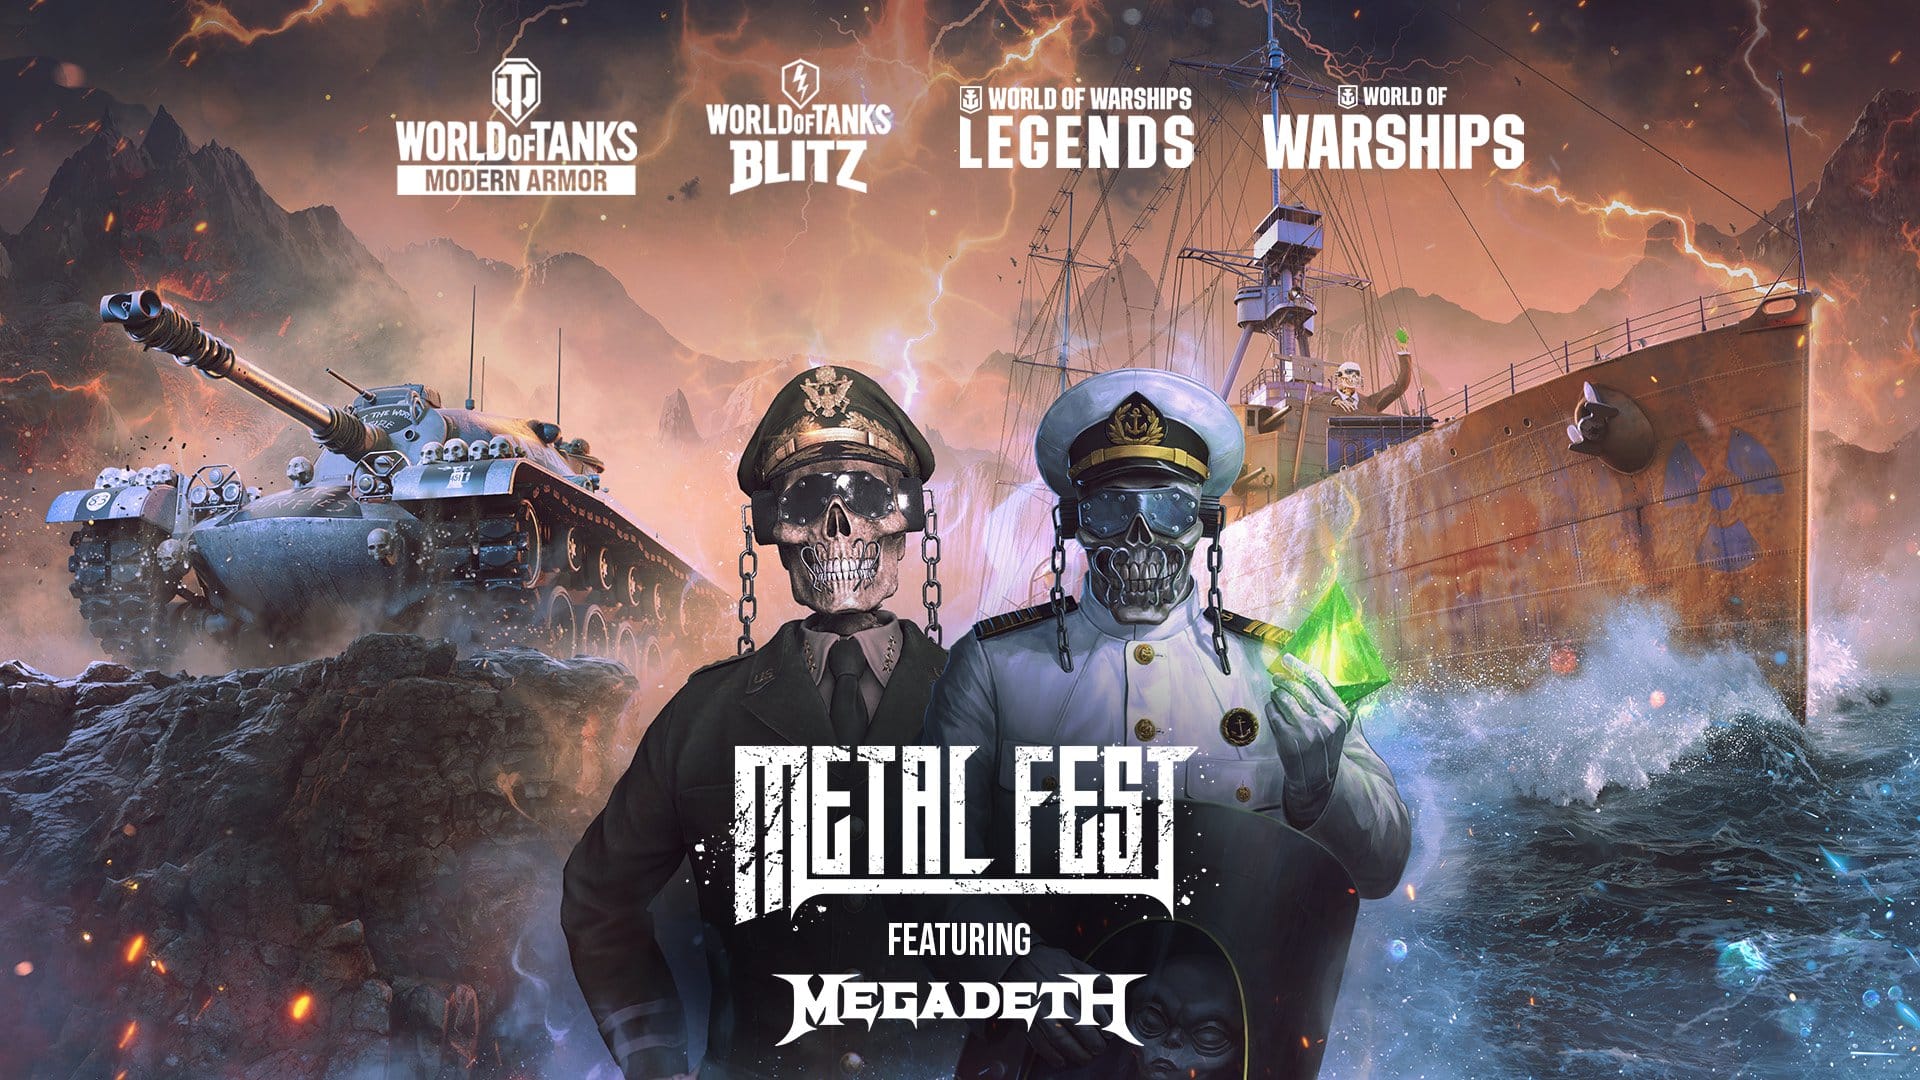 Metal-Fest-Megadeth-Event-Key-Art-16-9